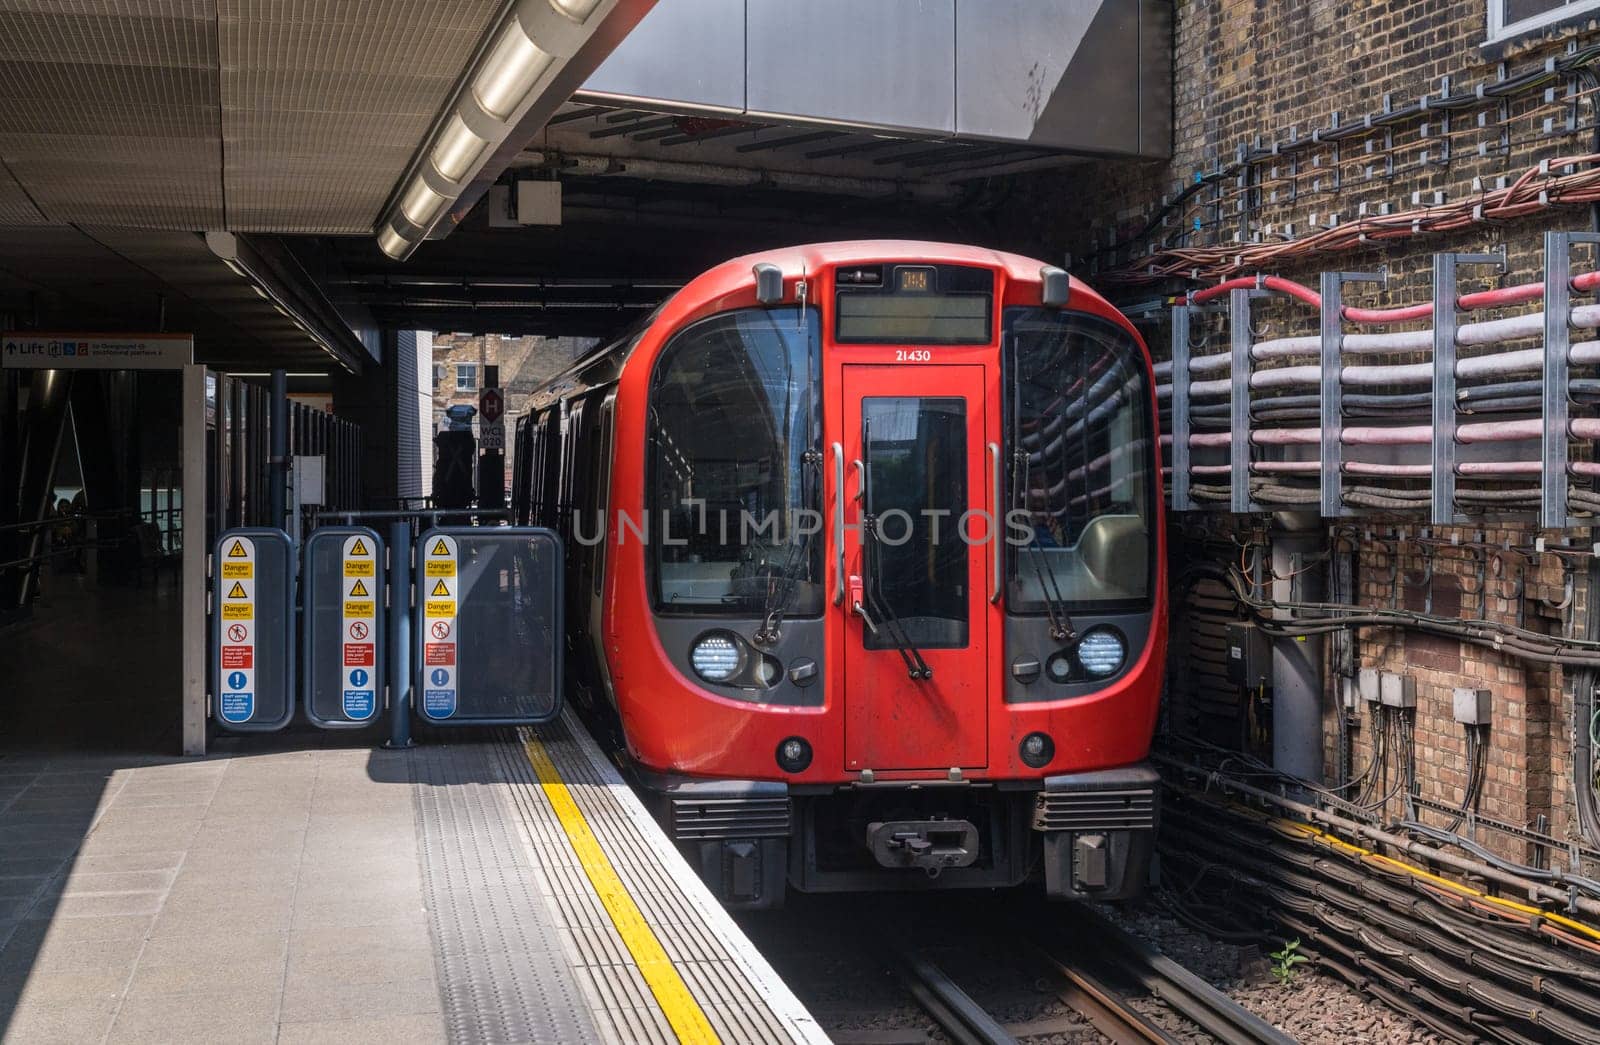 District line tube train entering Whitechapel station in London by steheap